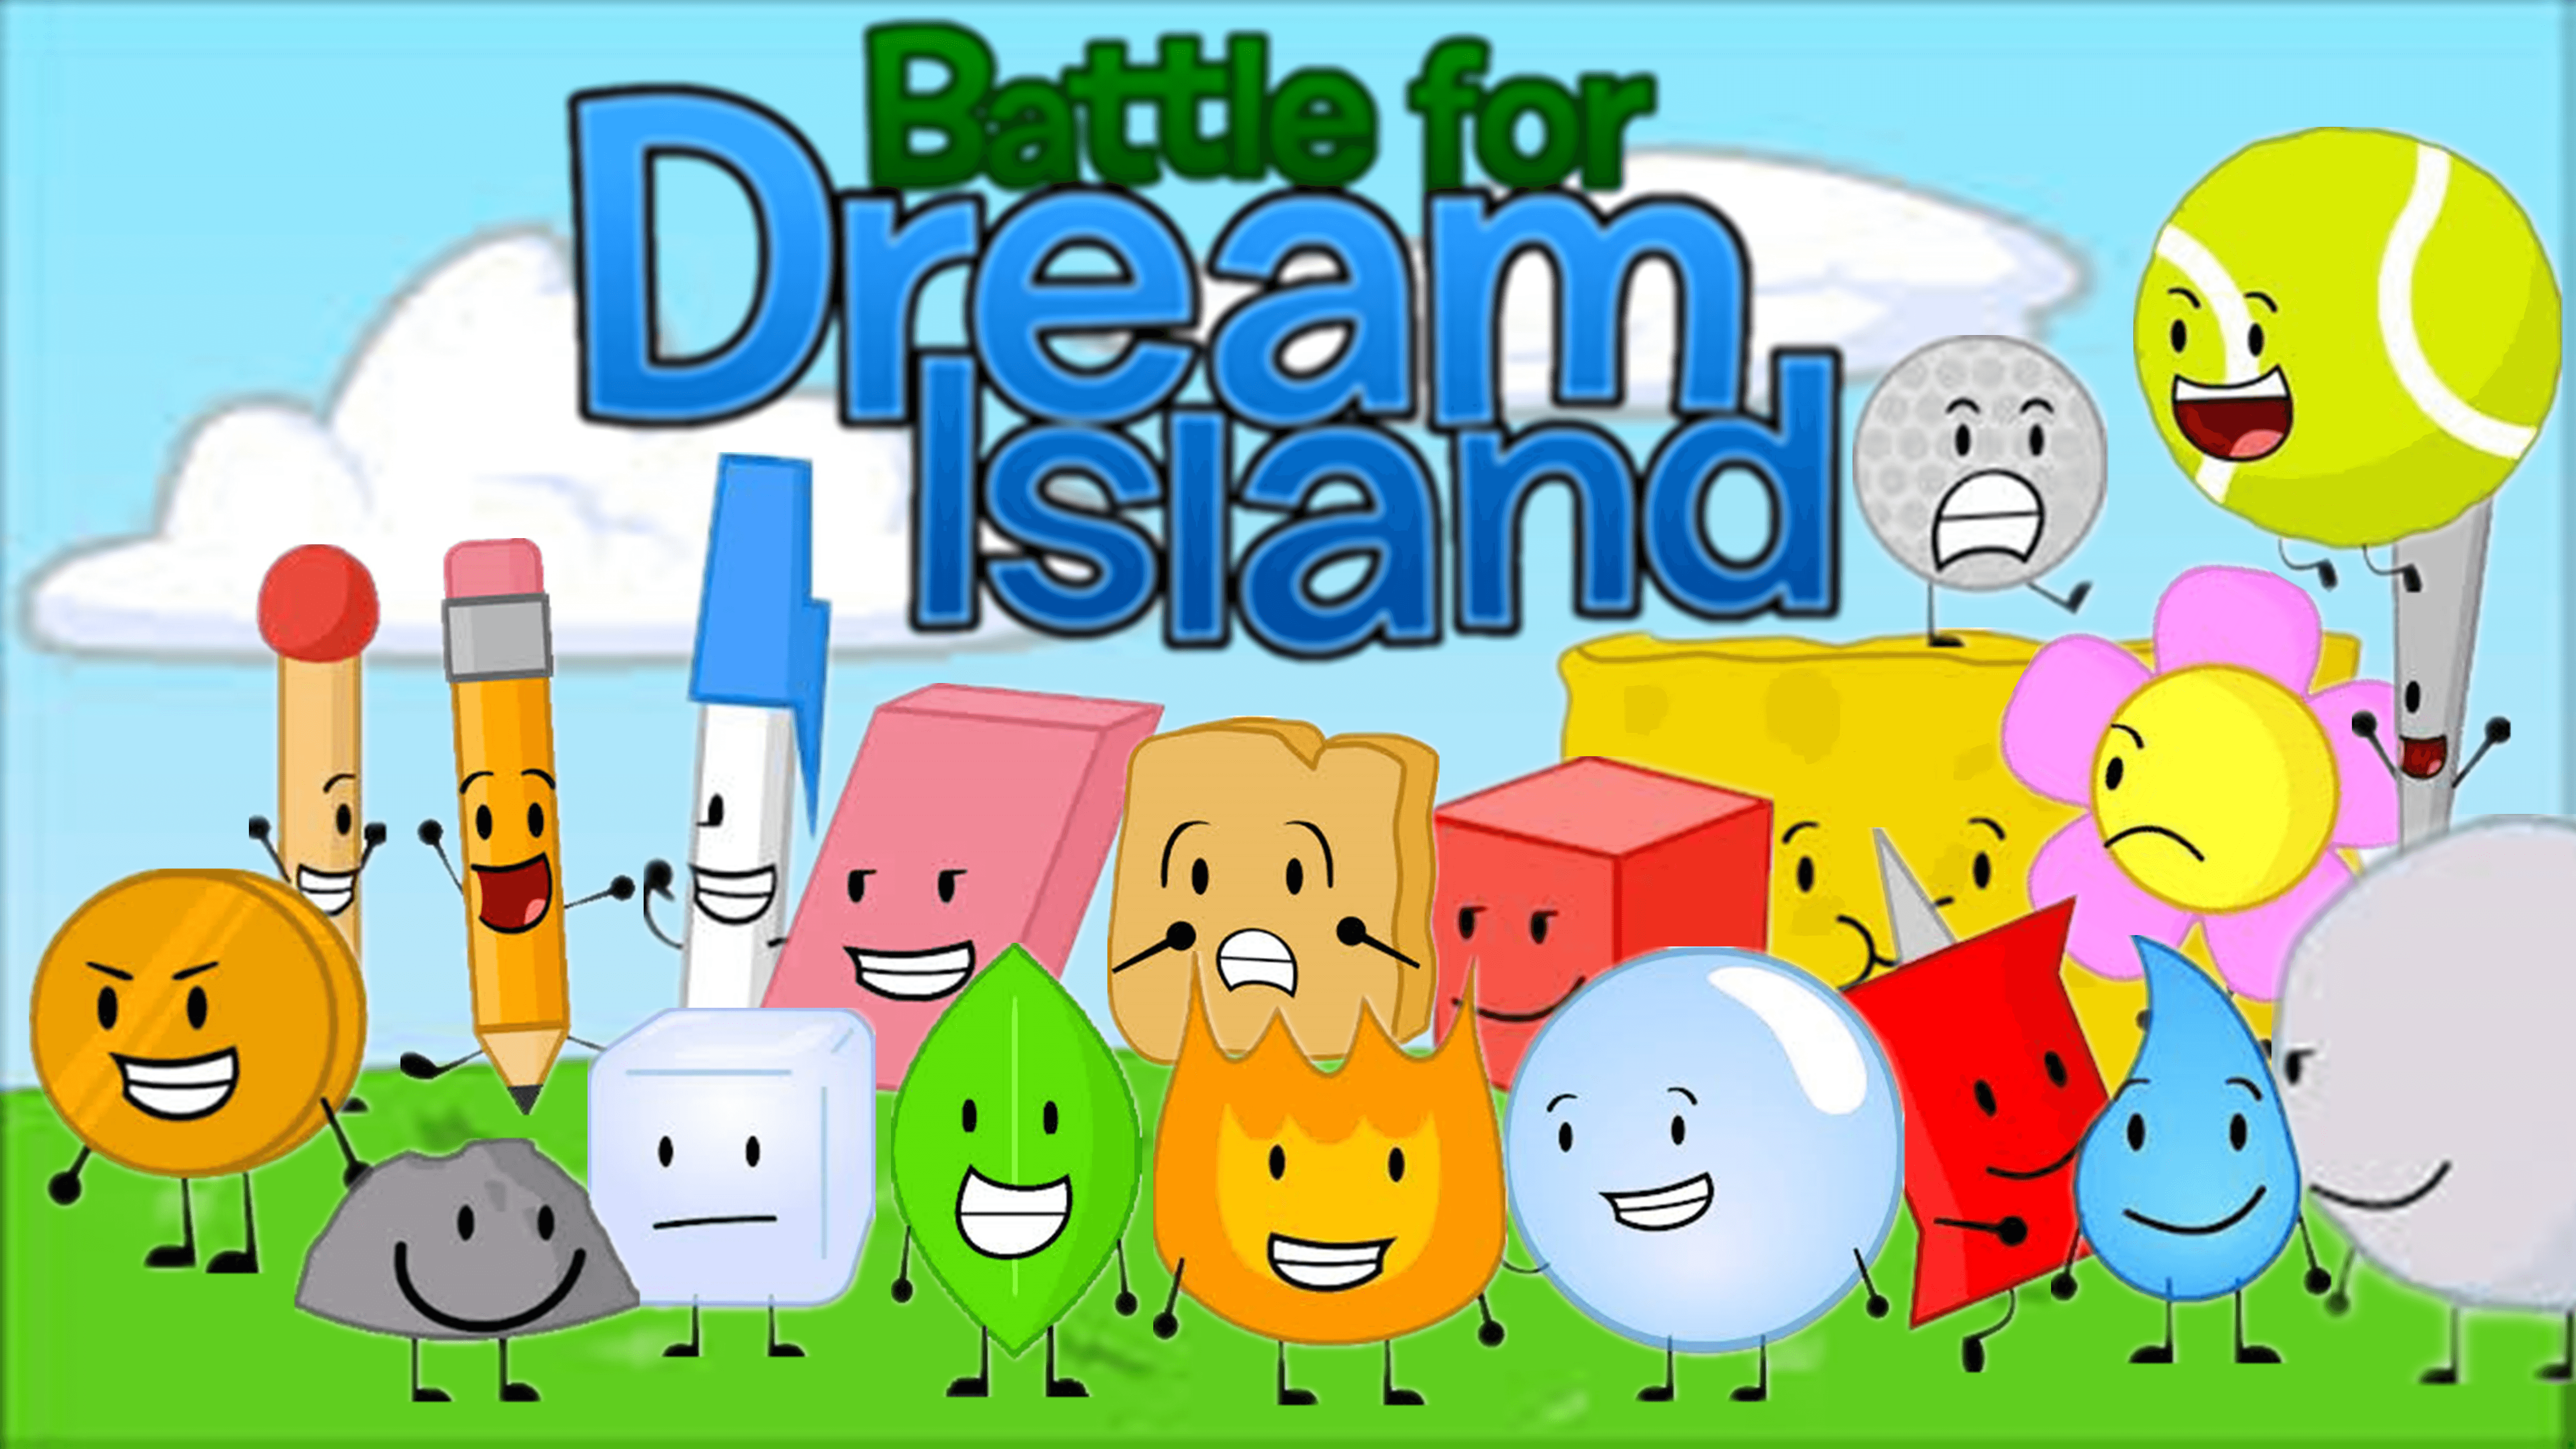 Battle for dream island logo